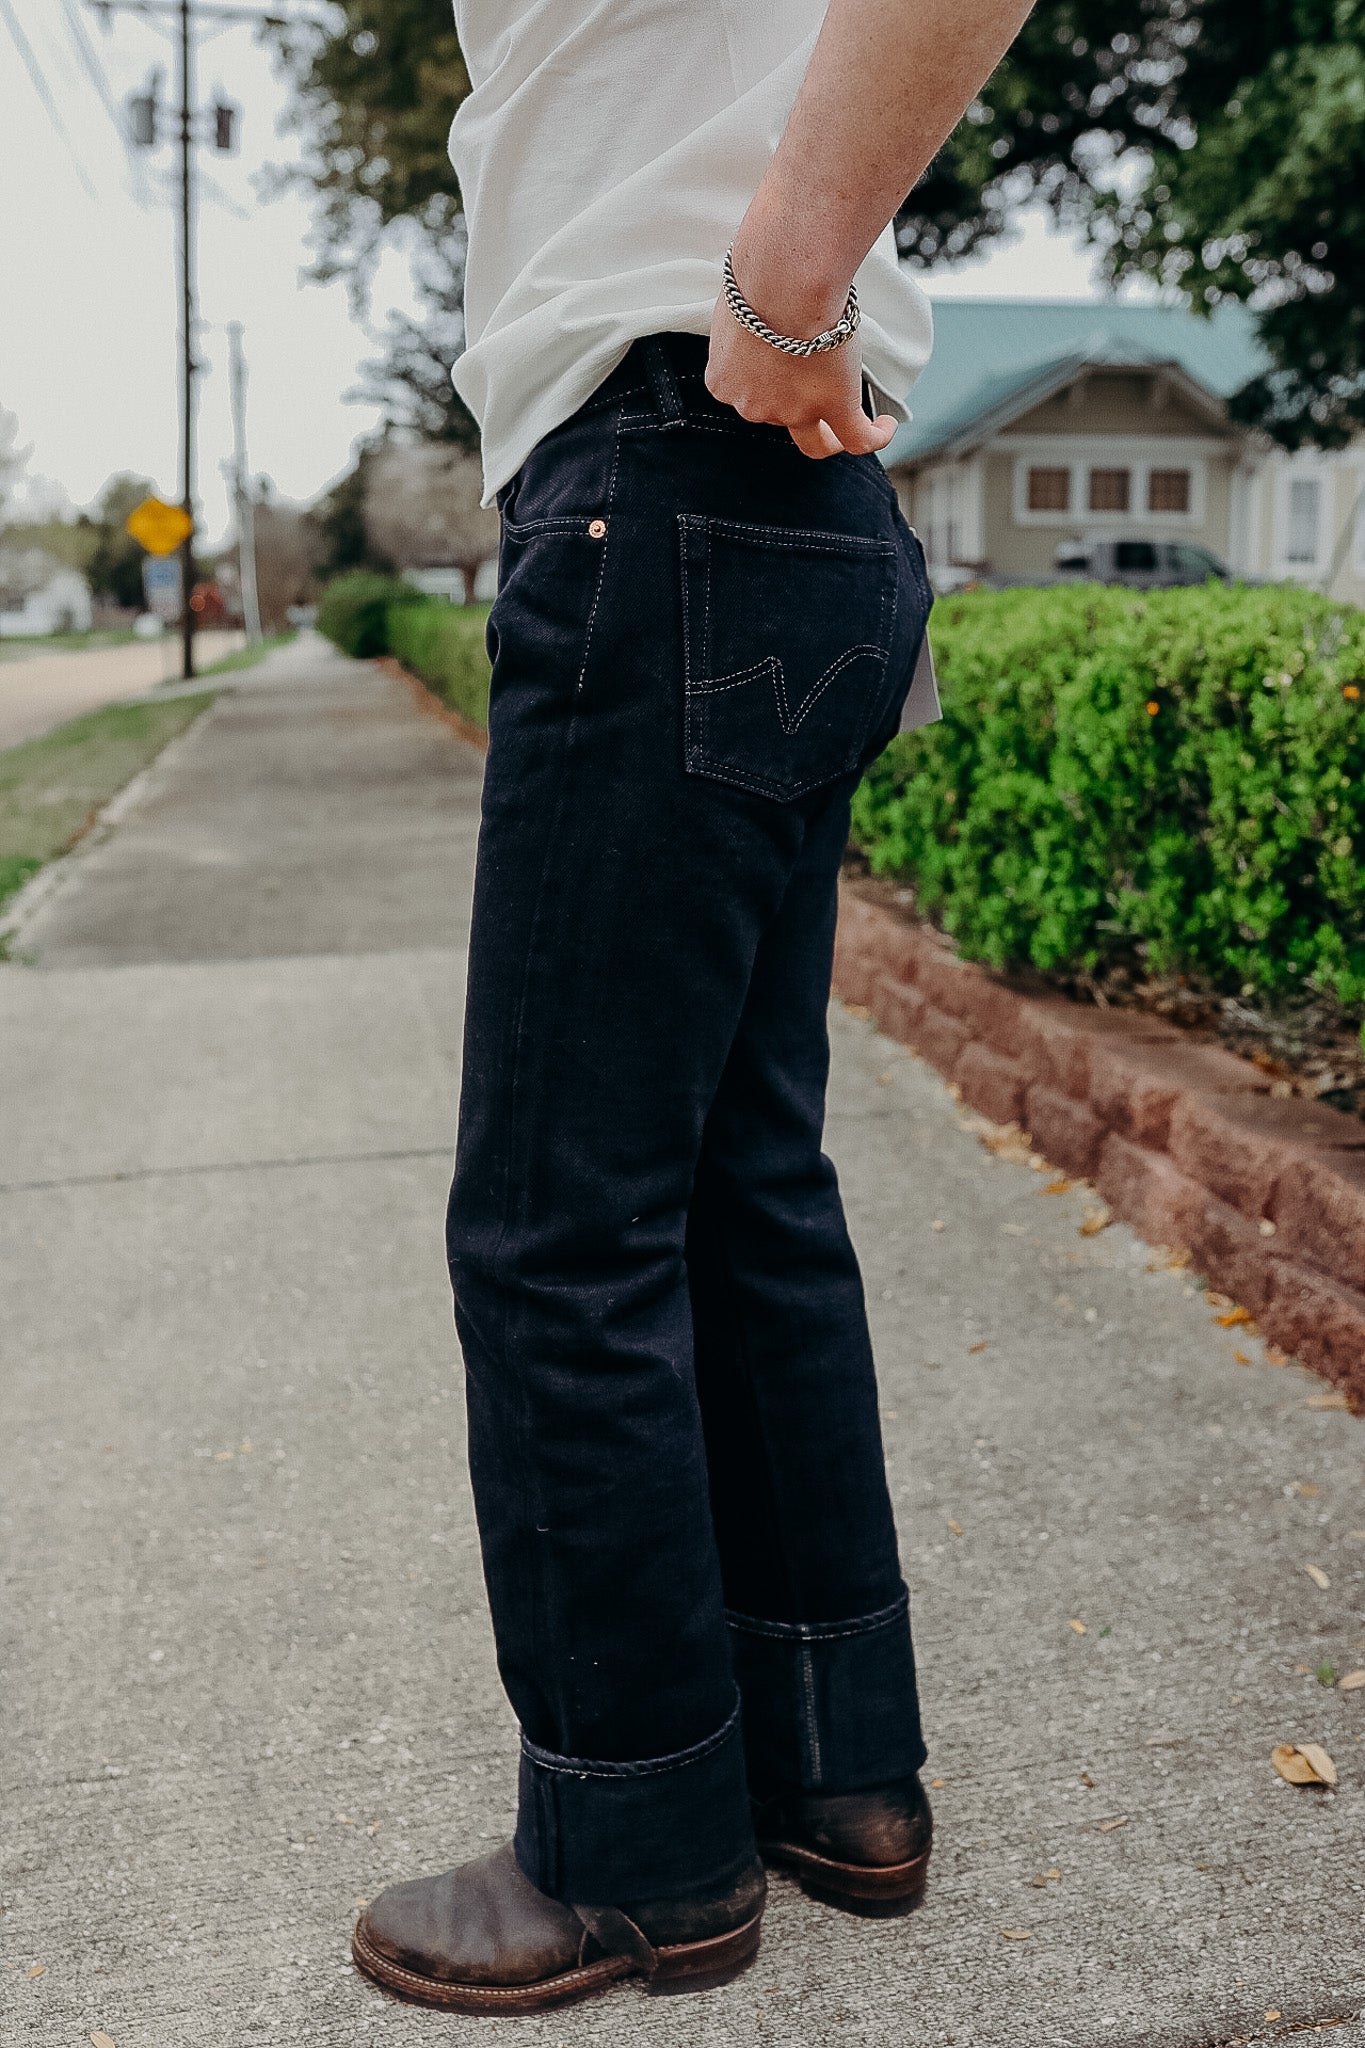 21oz Selvedge Denim Straight Cut Jeans - Indigo Overdyed Black IH-634S-B